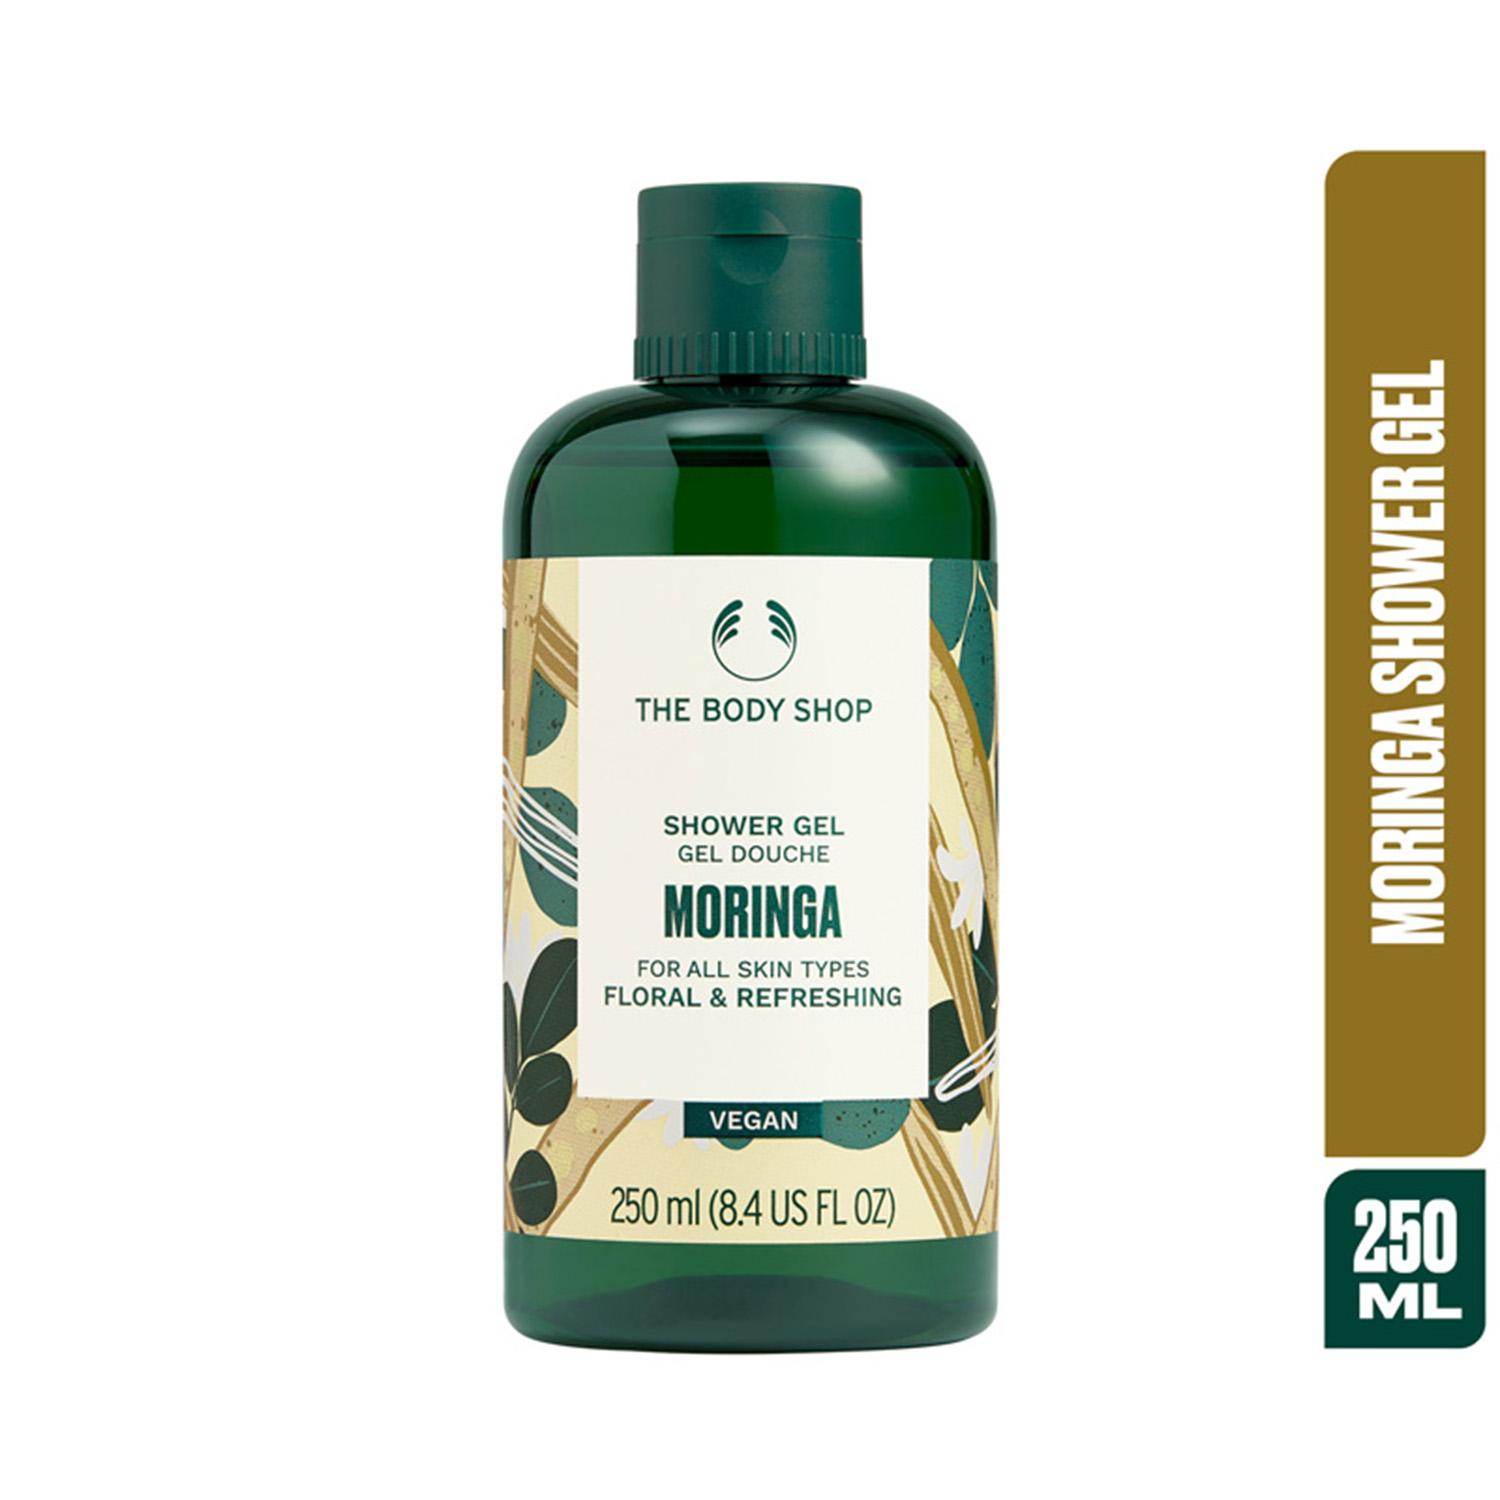 The Body Shop | The Body Shop Moringa Shower Gel (250ml)